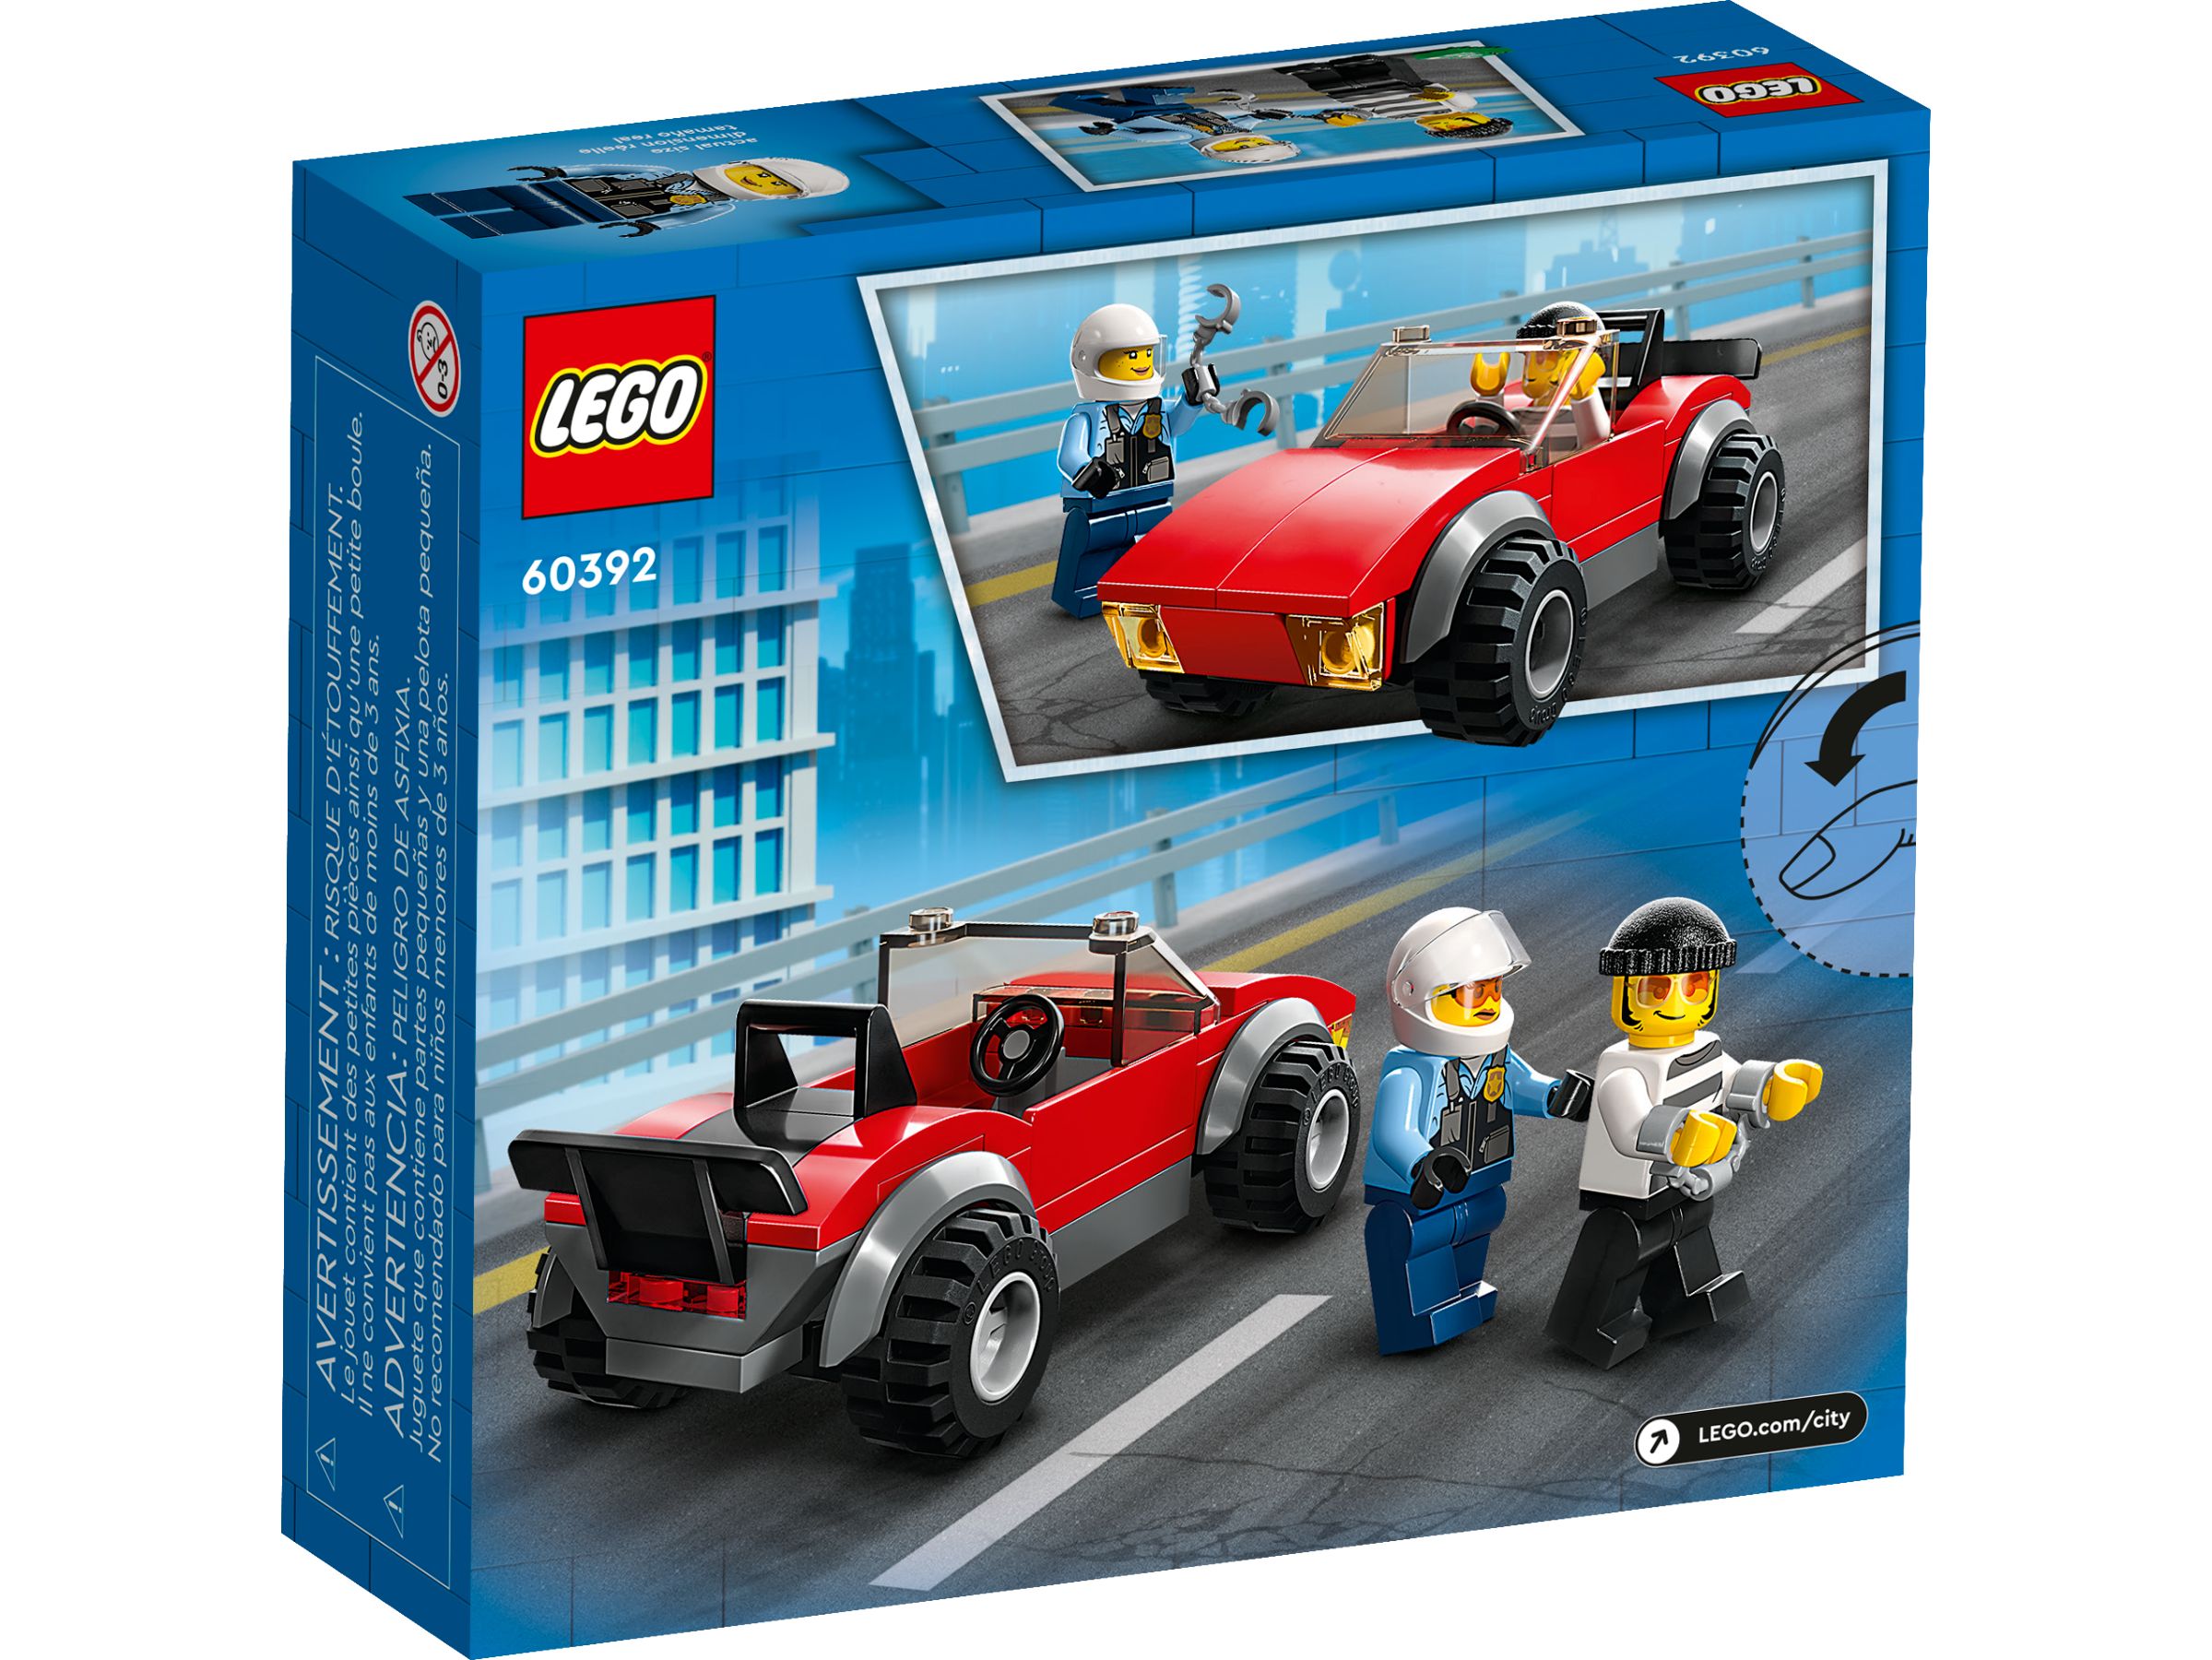 LEGO City 60392 Verfolgungsjagd mit dem Polizeimotorrad LEGO_60392_alt5.jpg